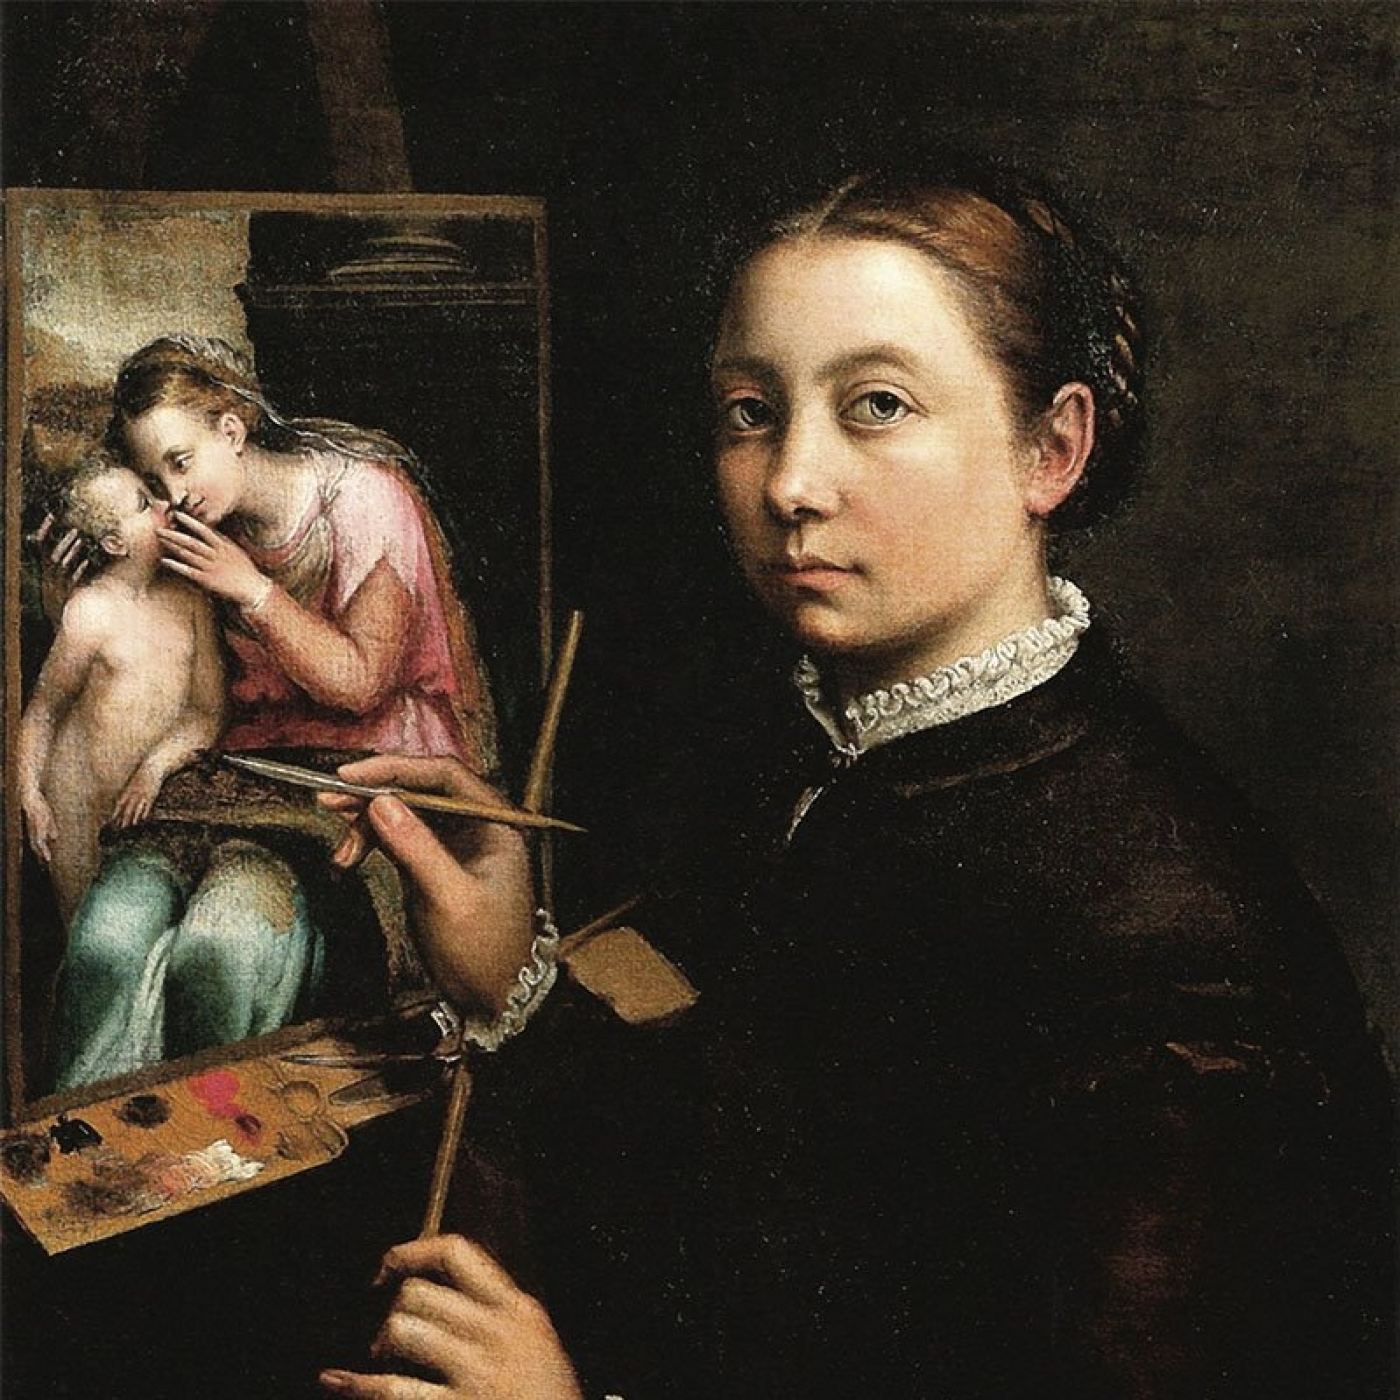 Artemisia Gentileschi, la lucha de una pintora herida